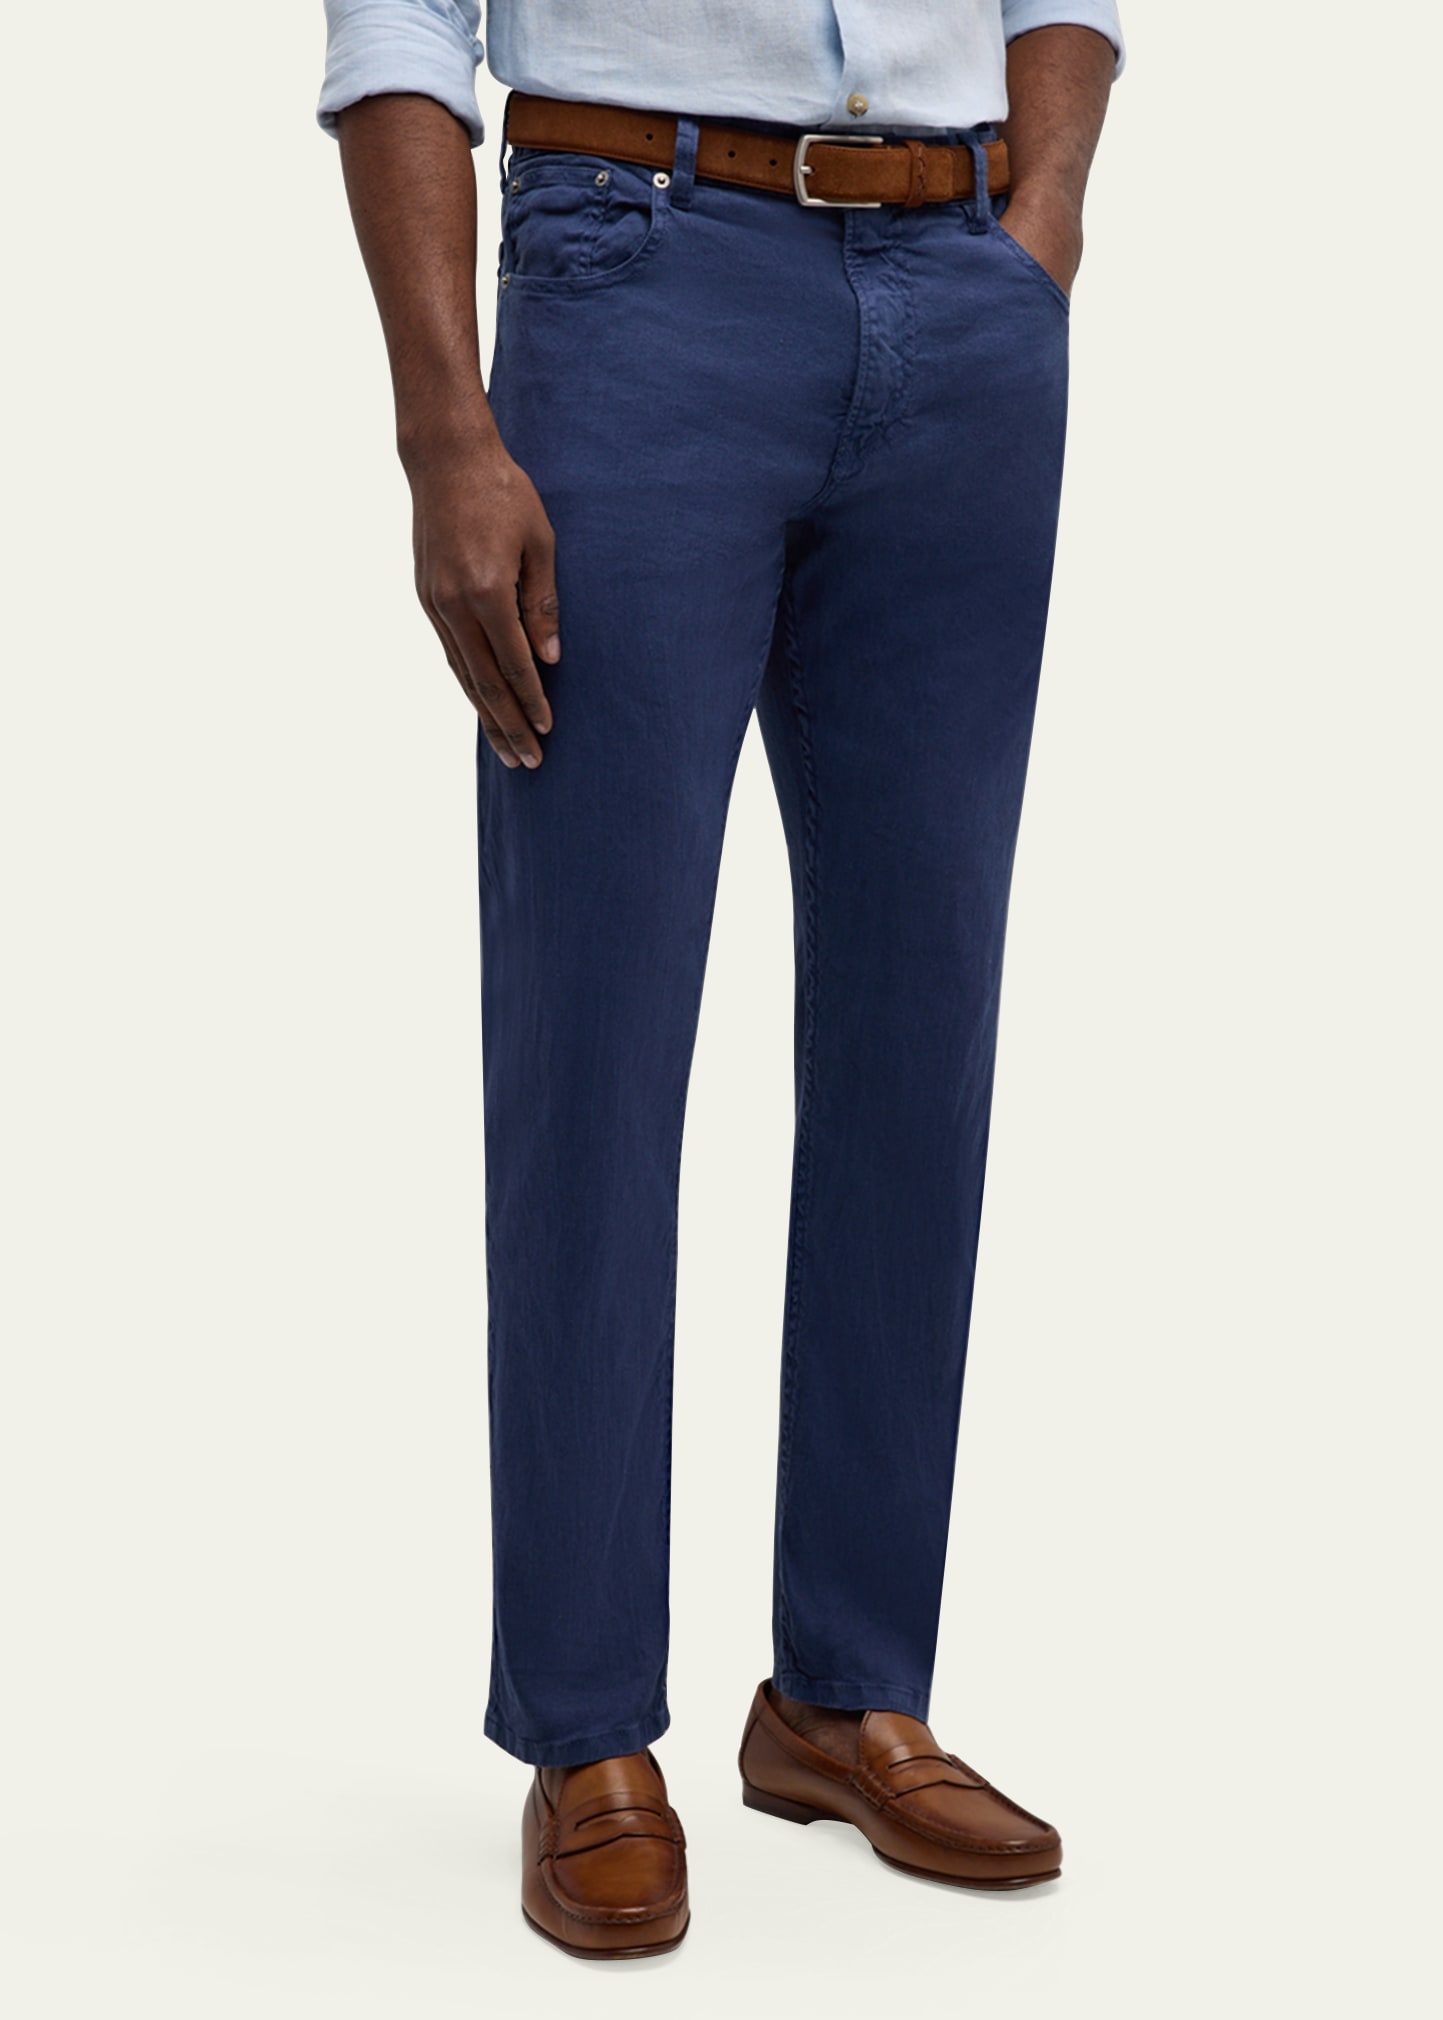 Men's Slim Stretch Linen and Cotton Jeans - 4